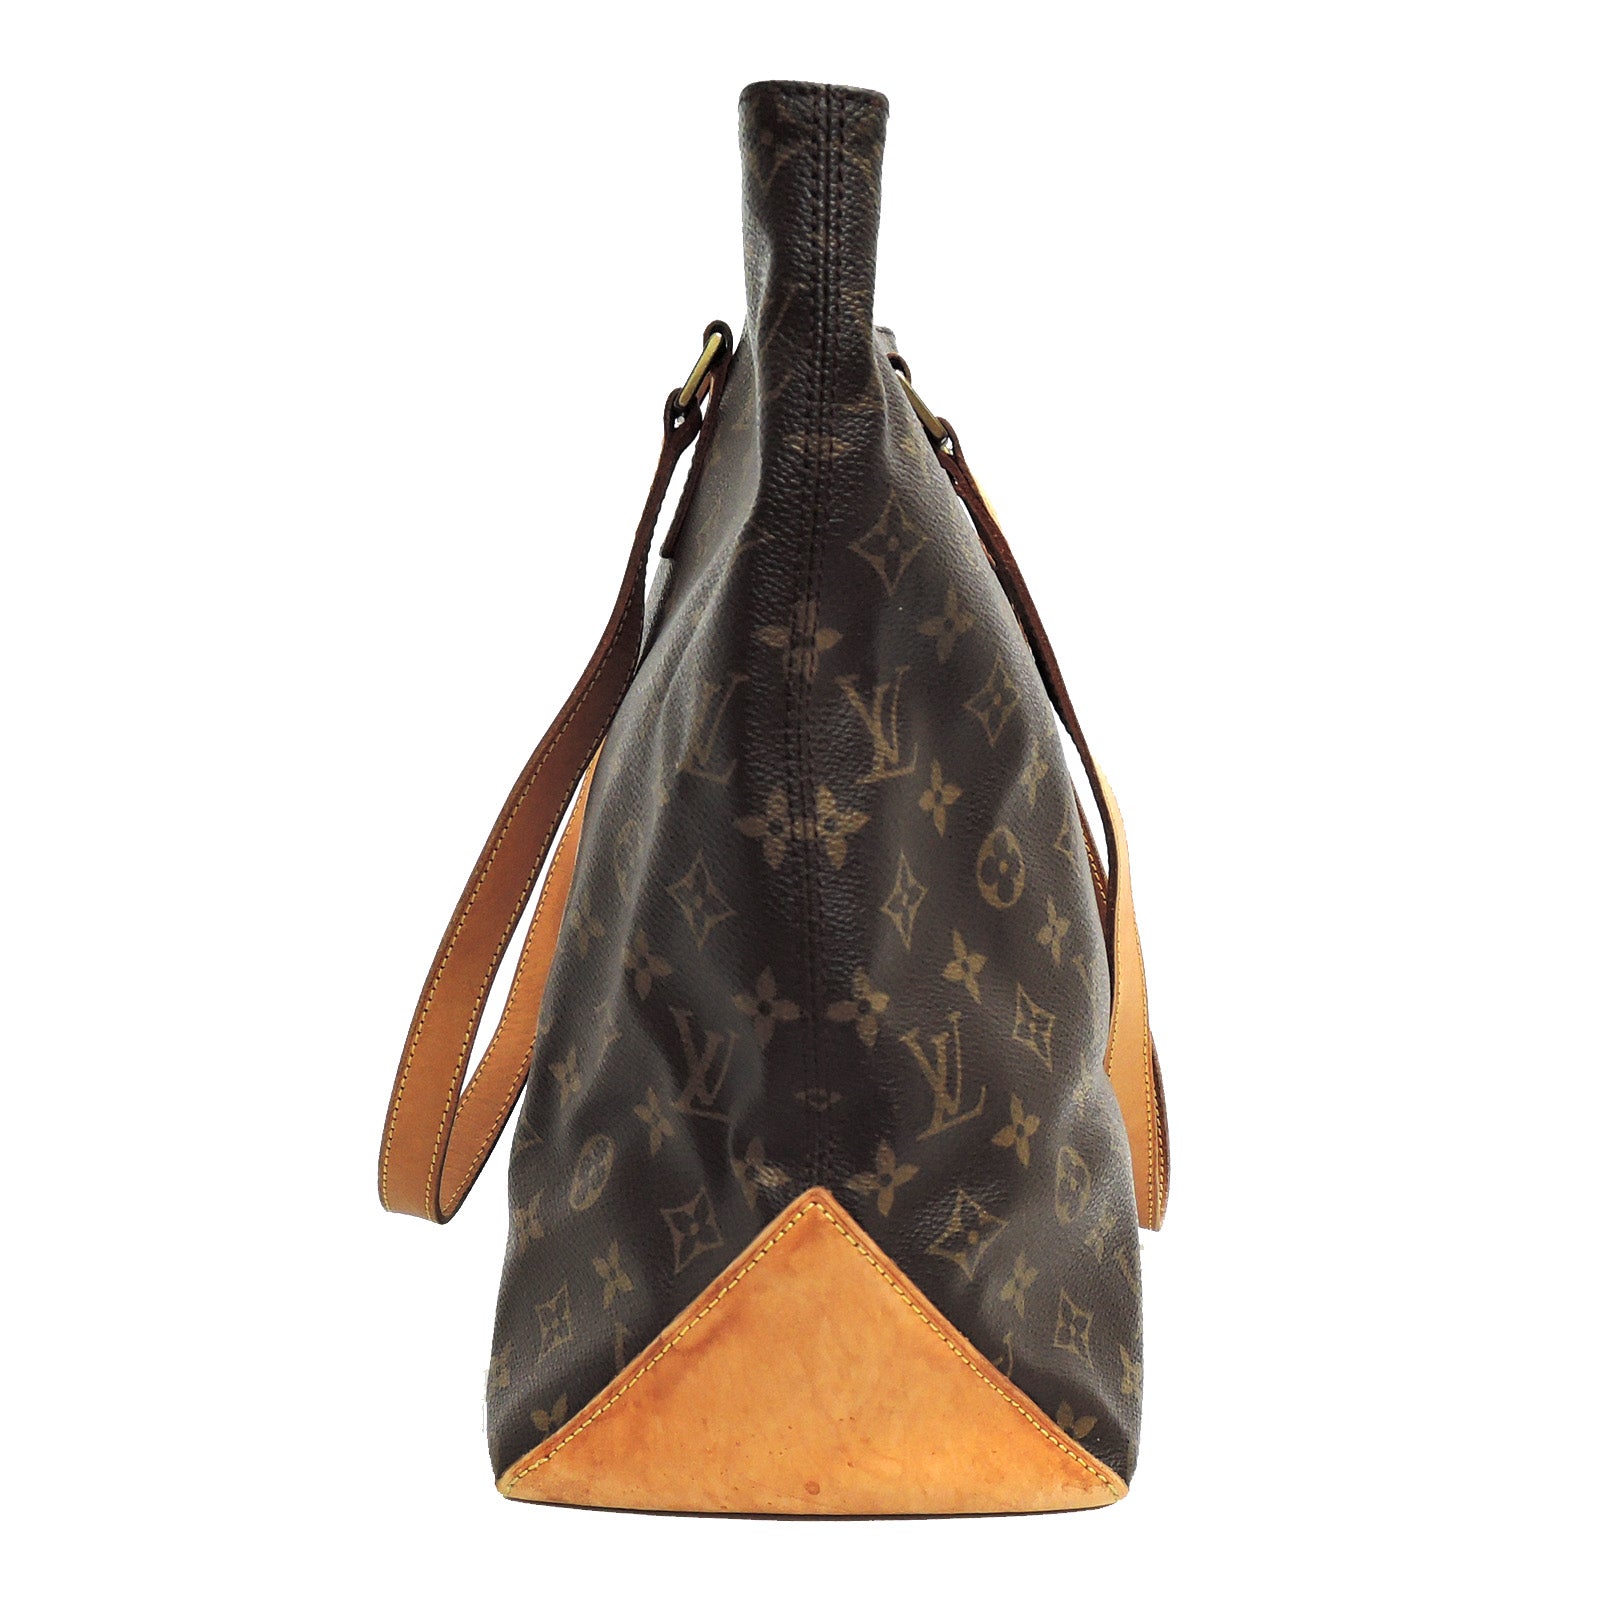 Louis Vuitton Monogram Canvas Sac Triangle Shoulder Bag Brown